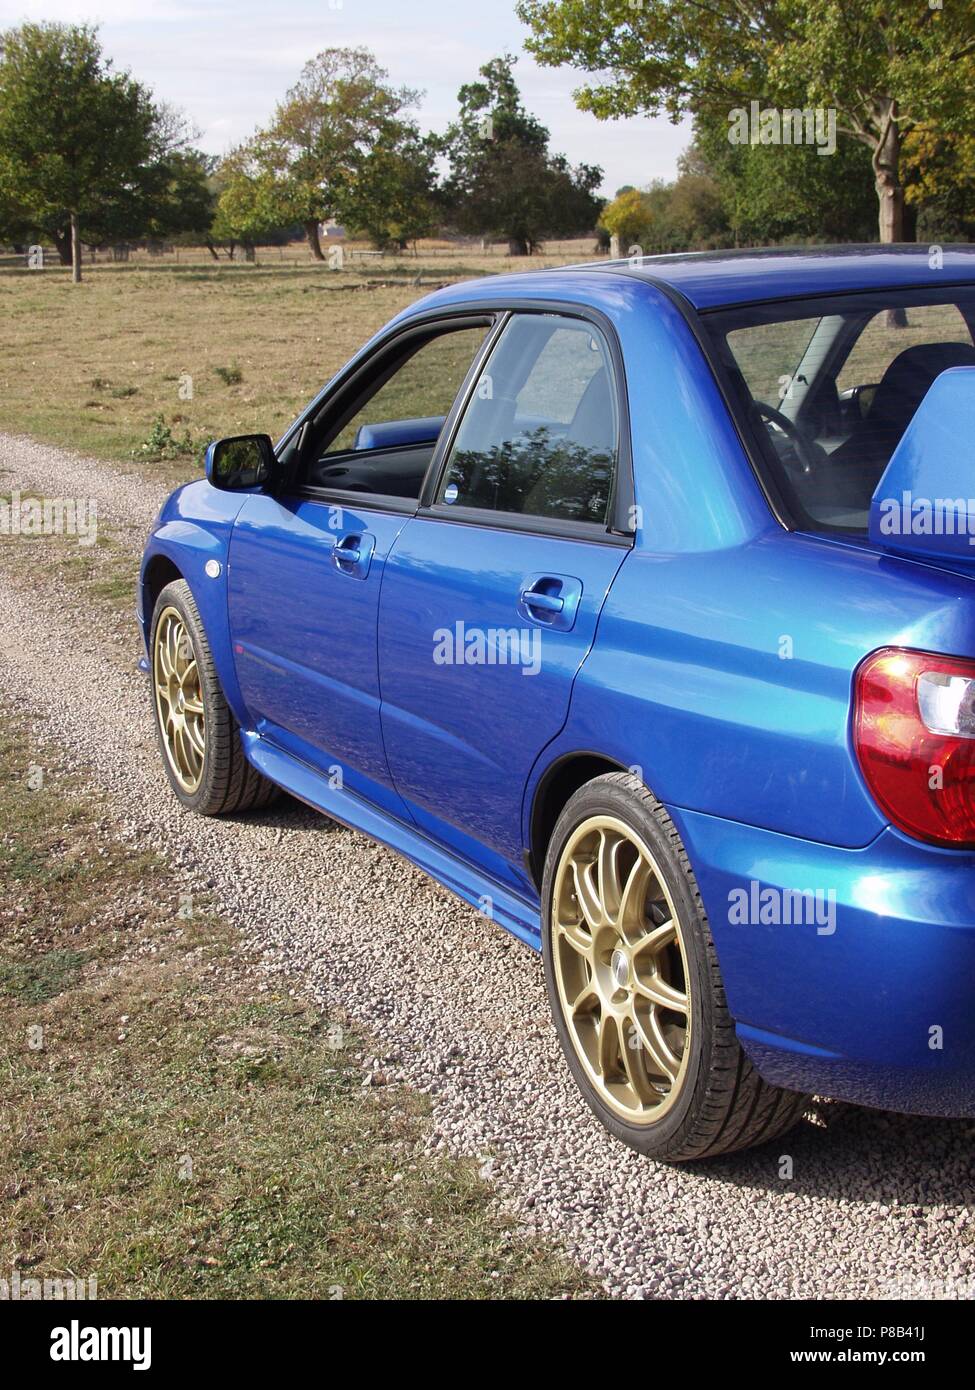 Subaru impreza wrx hi-res stock photography and images - Alamy